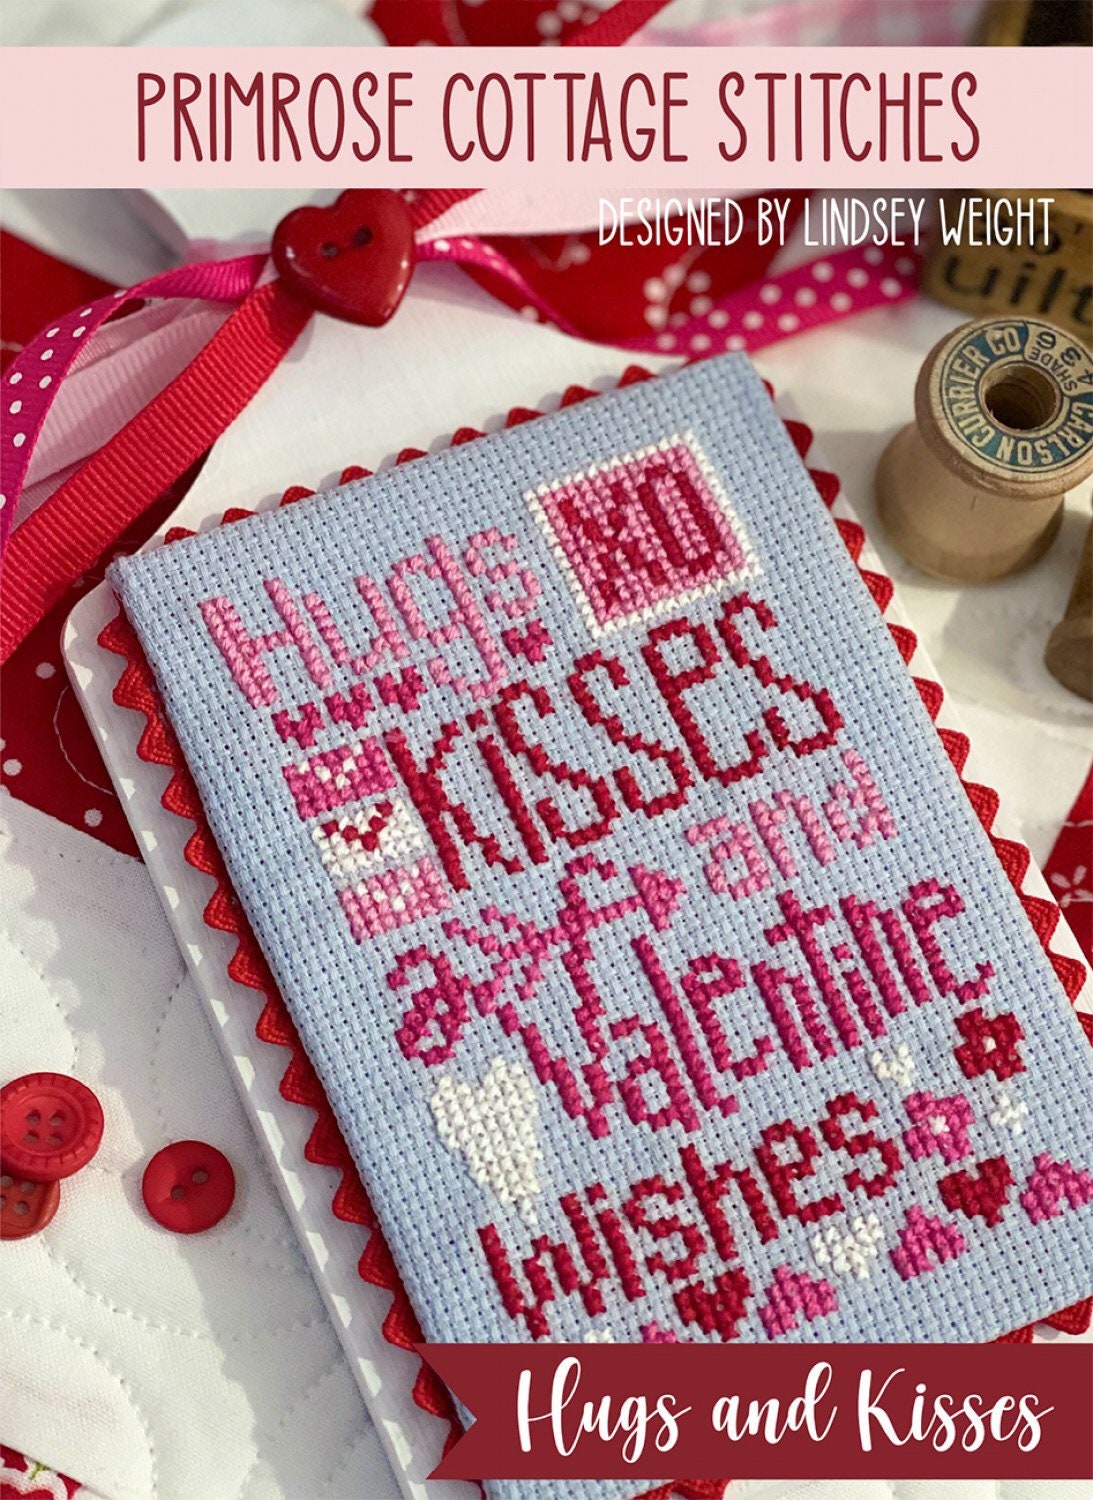 Hugs and Kisses Cross Stitch Pattern - Primrose Cottage Stitches - 41 x 64 stitches